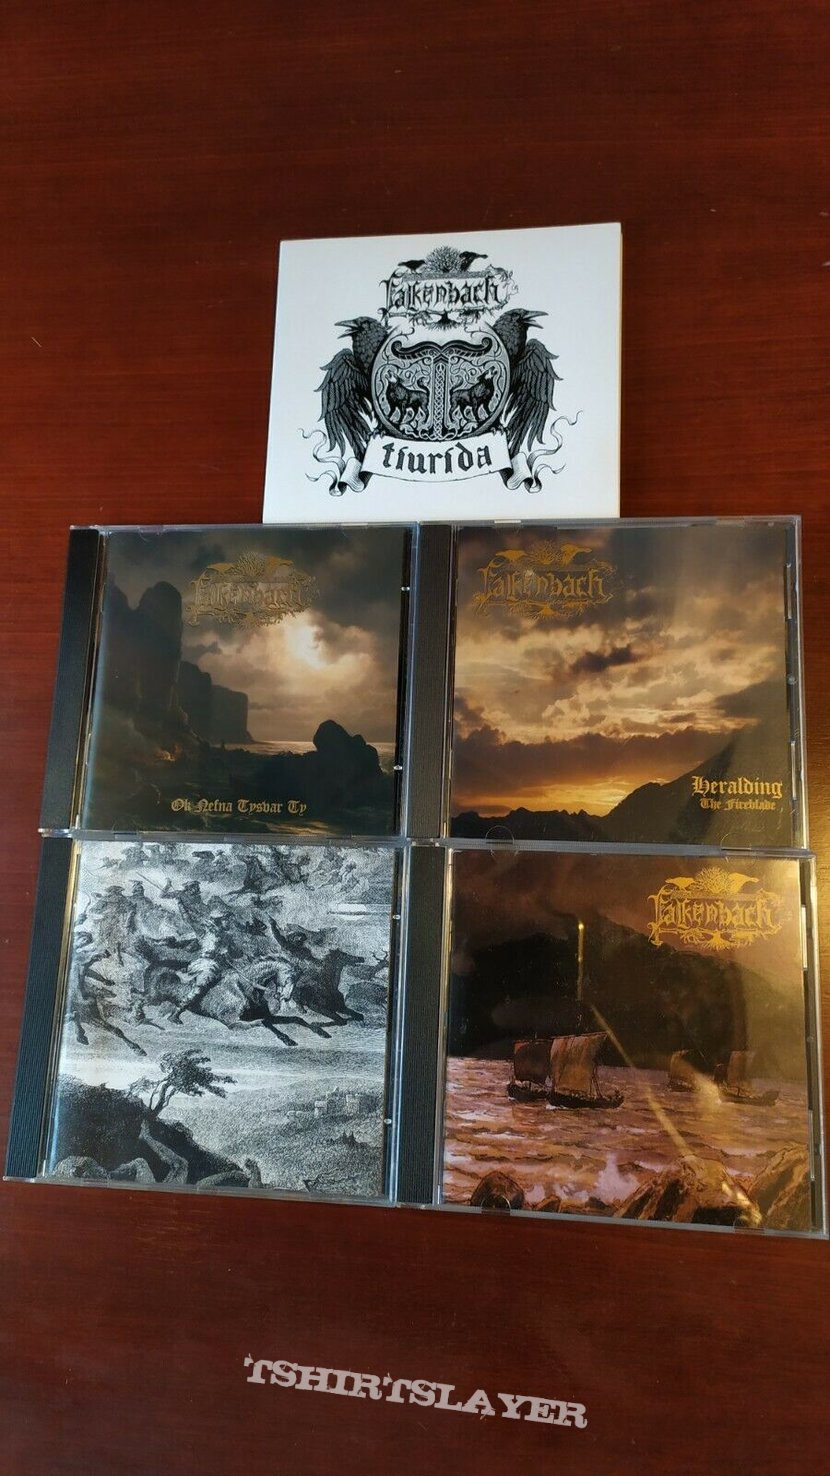 Falkenbach 5 CDs